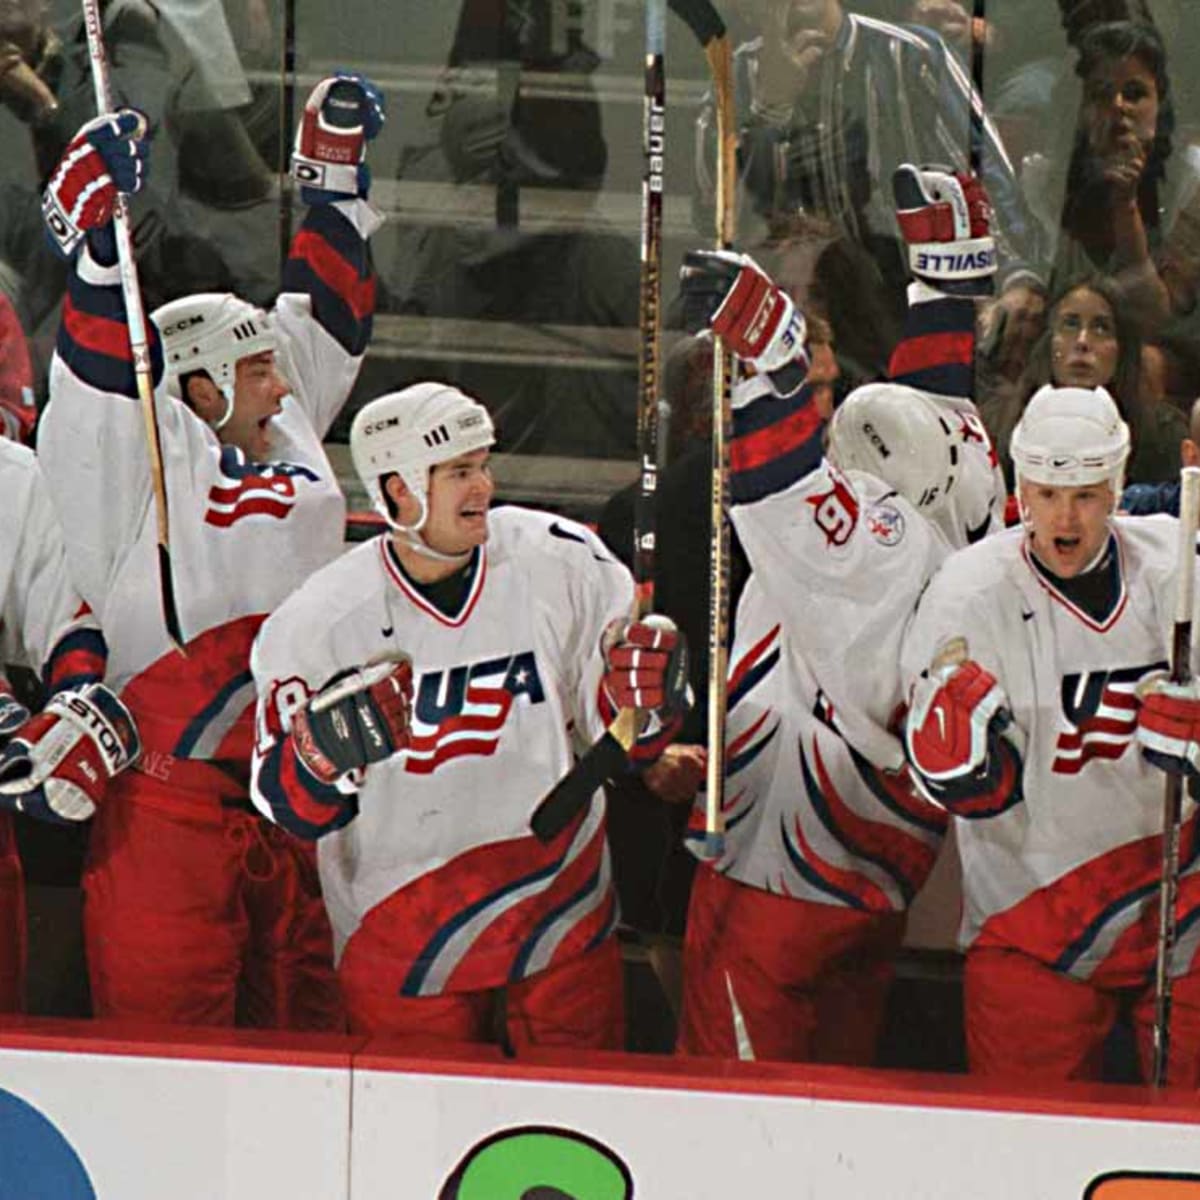 Hockey World Cup in 1996 was milestone for USA hockey